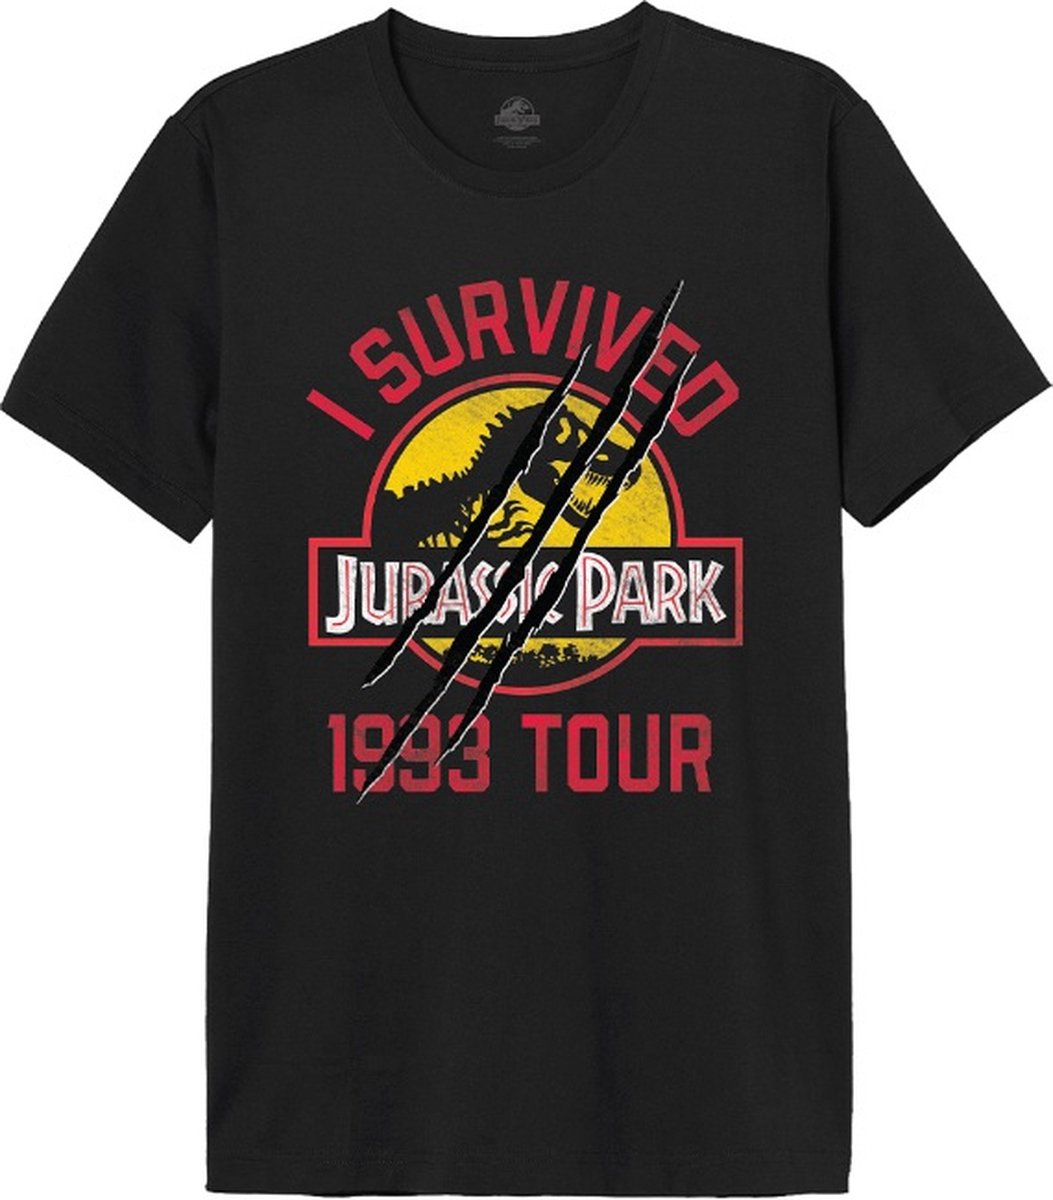 JURASSIC PARK - I SURVIVED 1993 TOUR - T-SHIRT (XL)